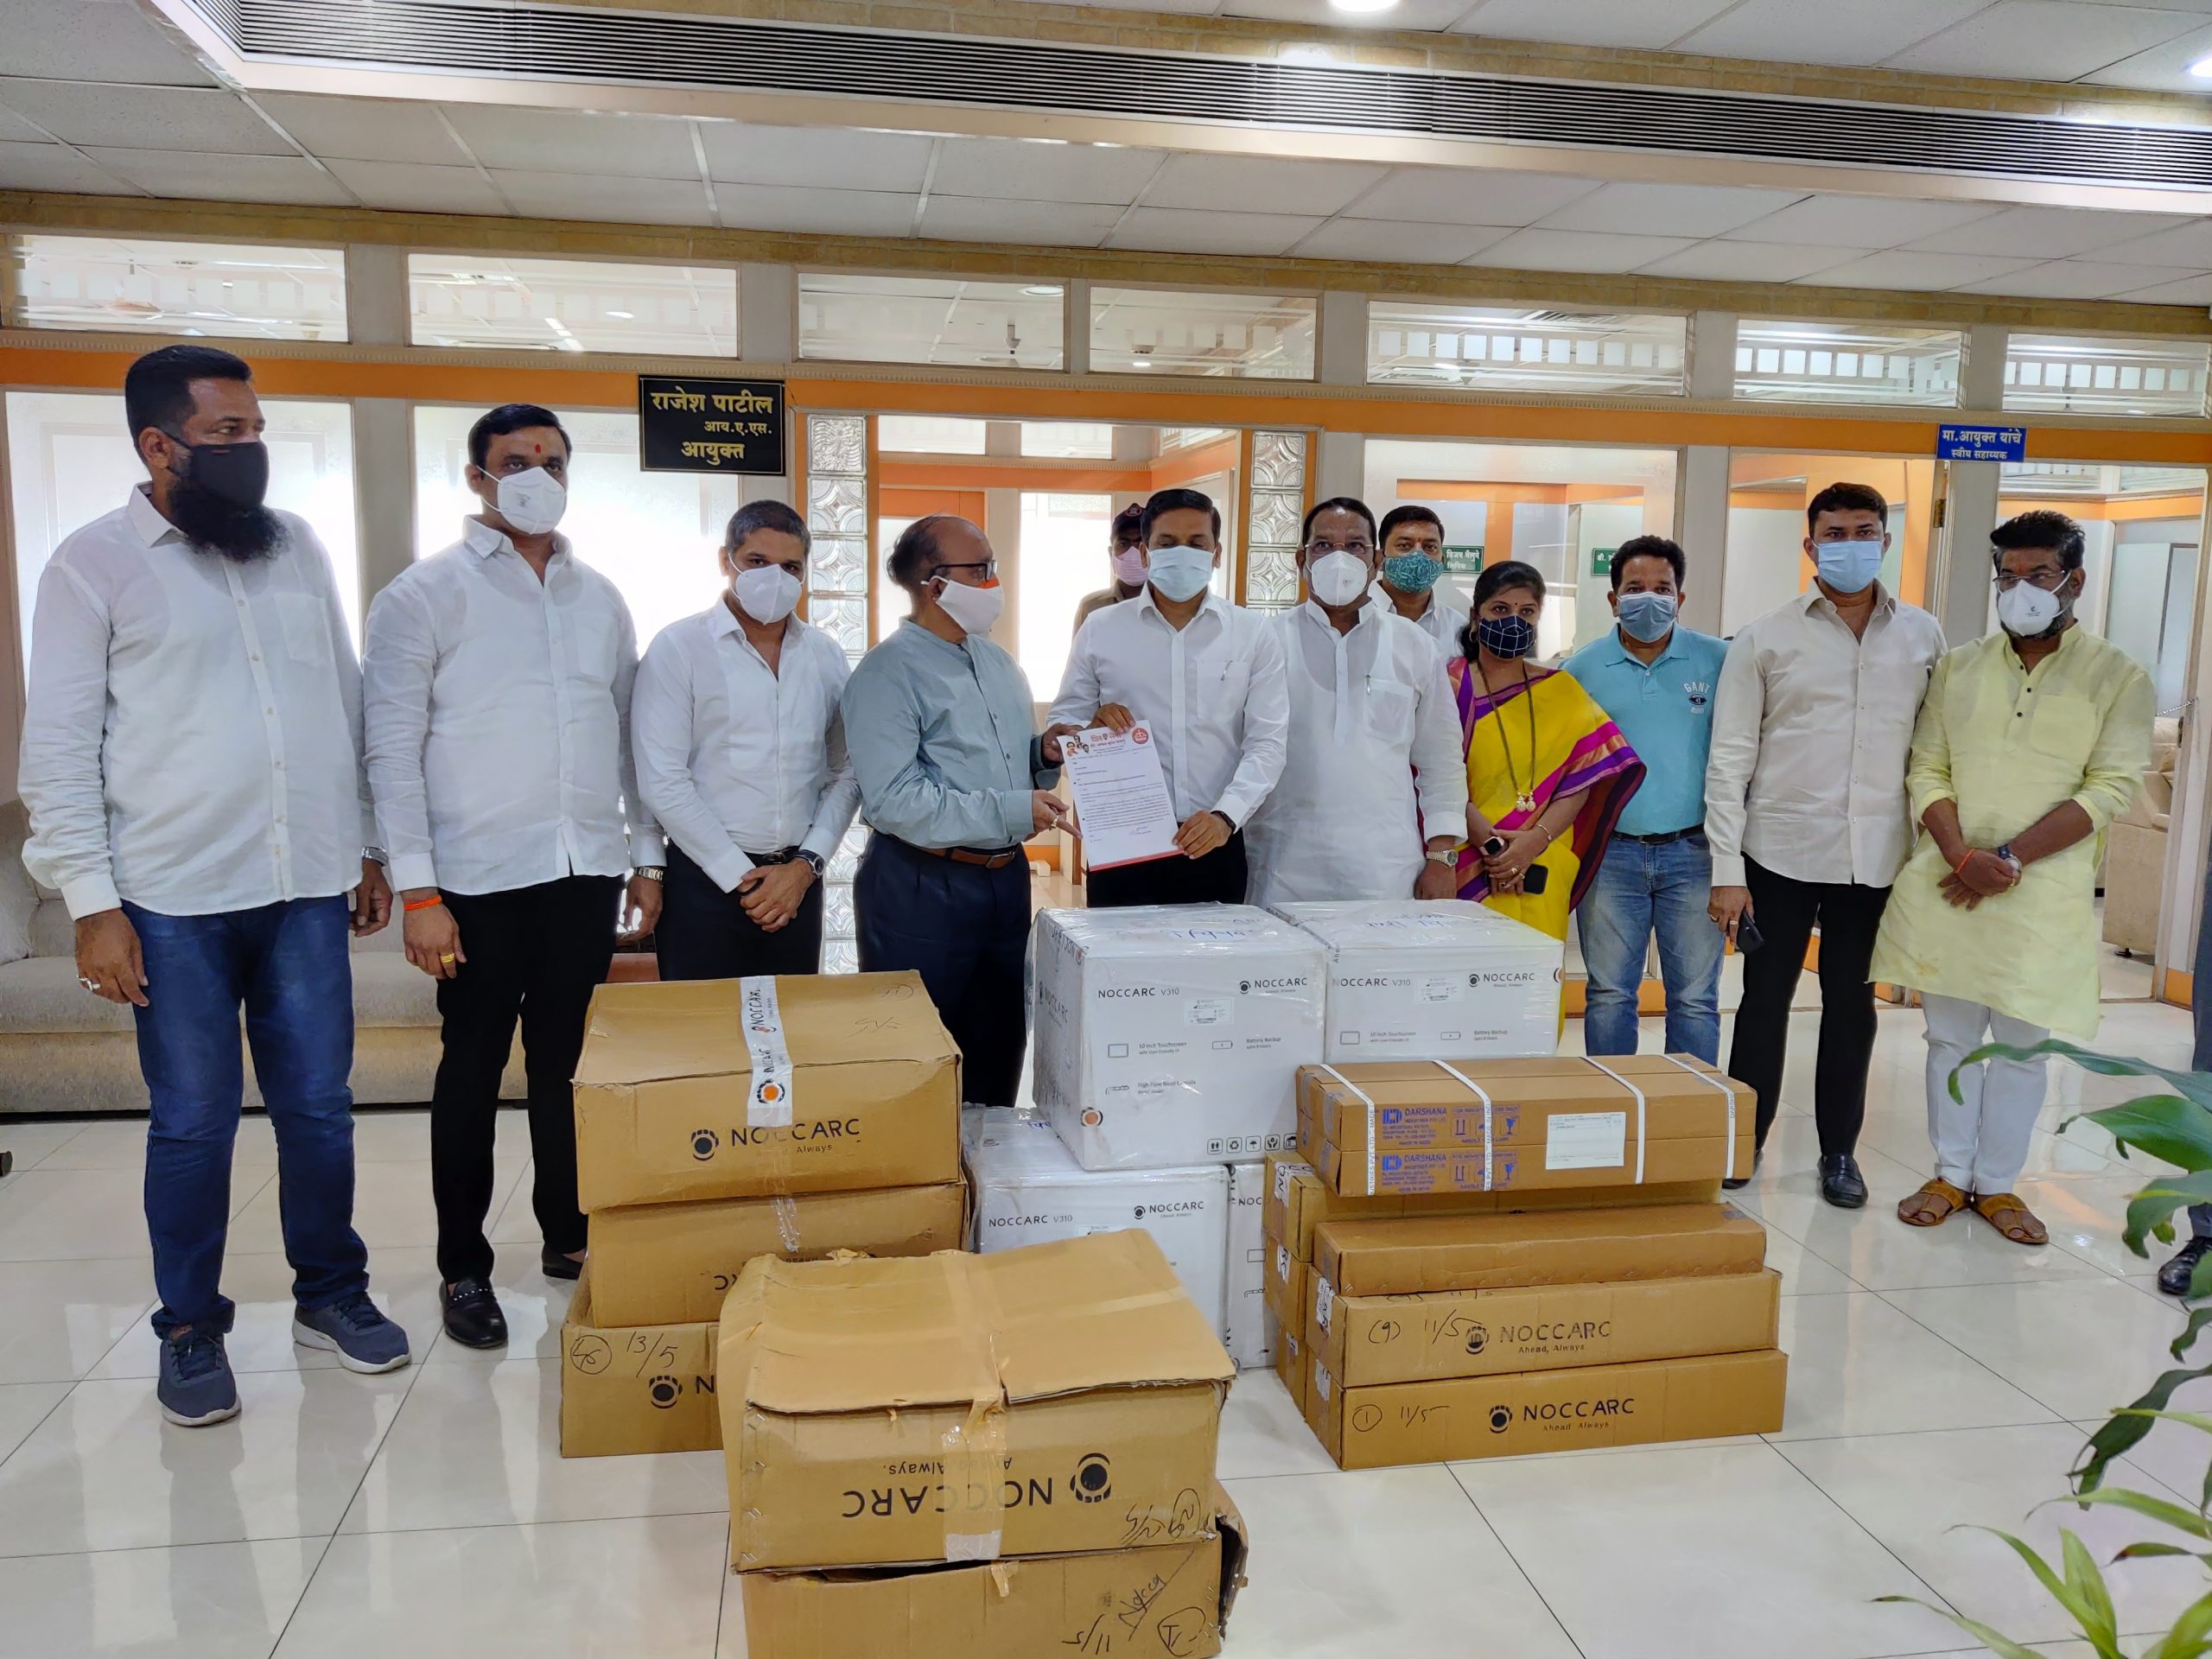 Environment Minister Aditya Thackeray gave five ventilators to Pimpri-Chinchwad Municipal Corporation